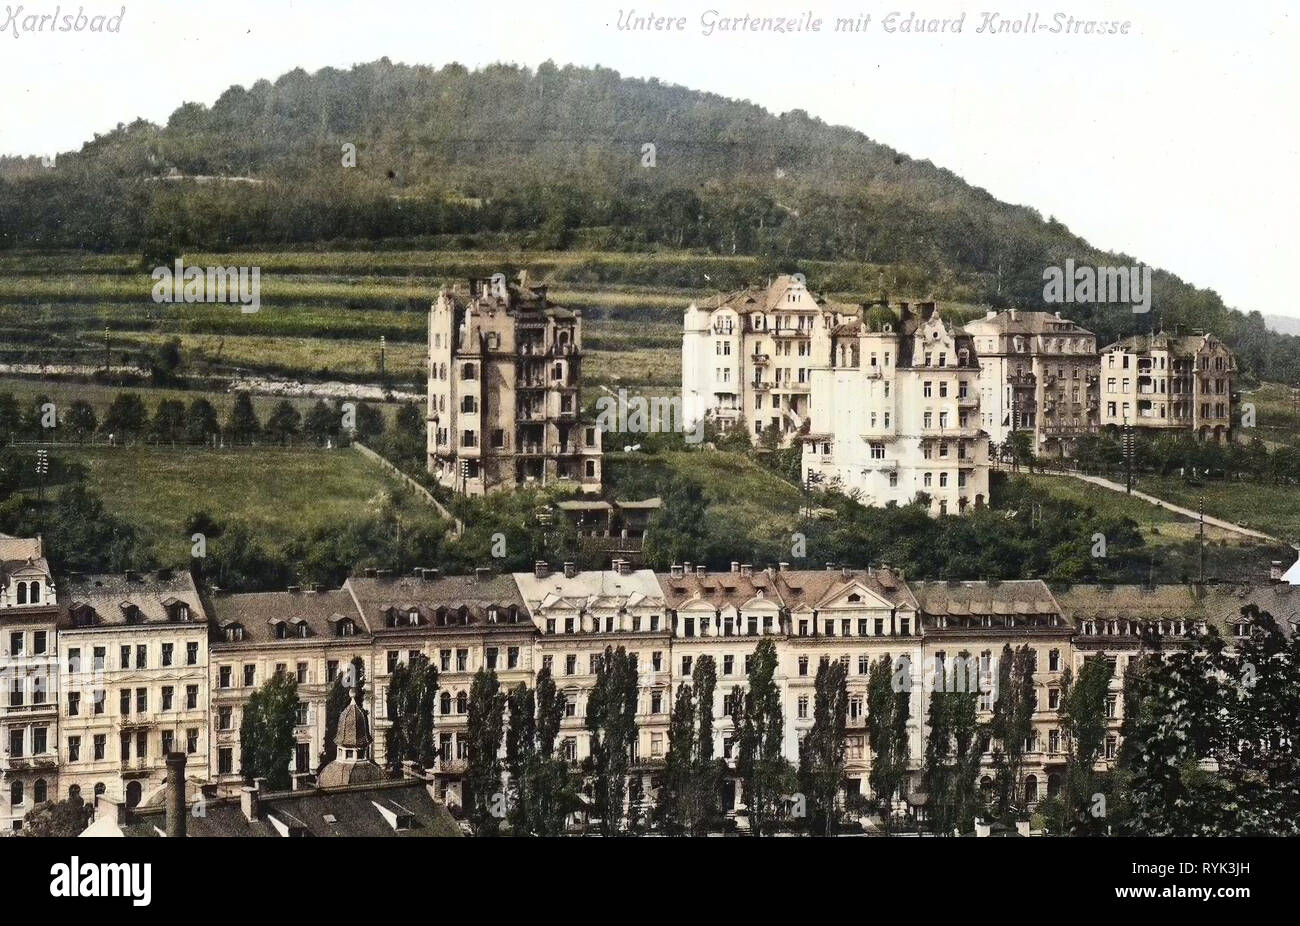 Buildings in Karlovy Vary, 1914, Karlovy Vary Region, Karlsbad, Untere Gartenzeile und Eduard Knoll Straße, Czech Republic Stock Photo